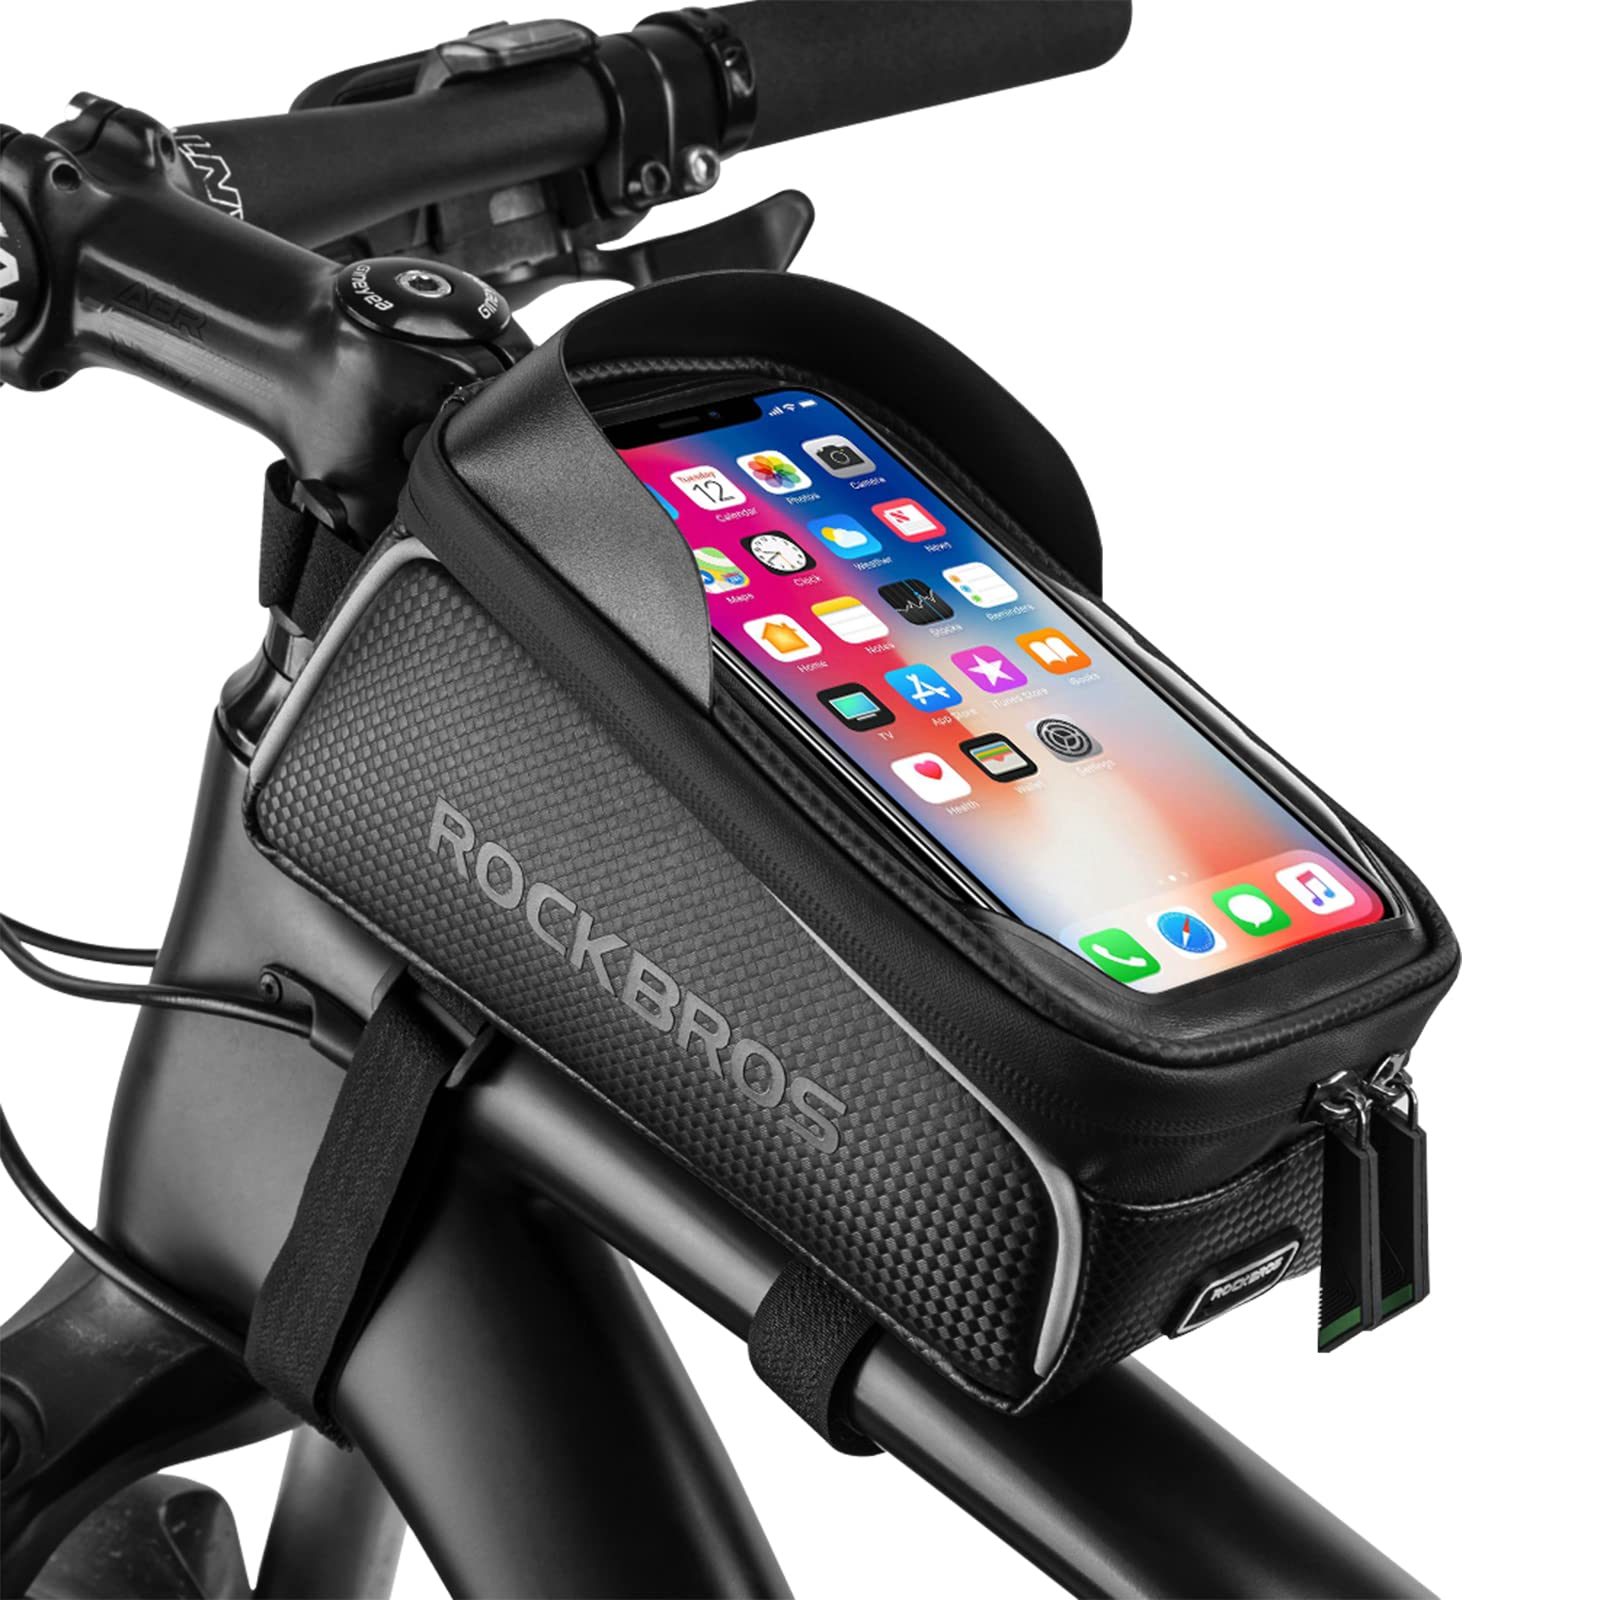 ROCKBROS Bike Frame Bag Waterproof Top Tube Bag Phone Touch Screen